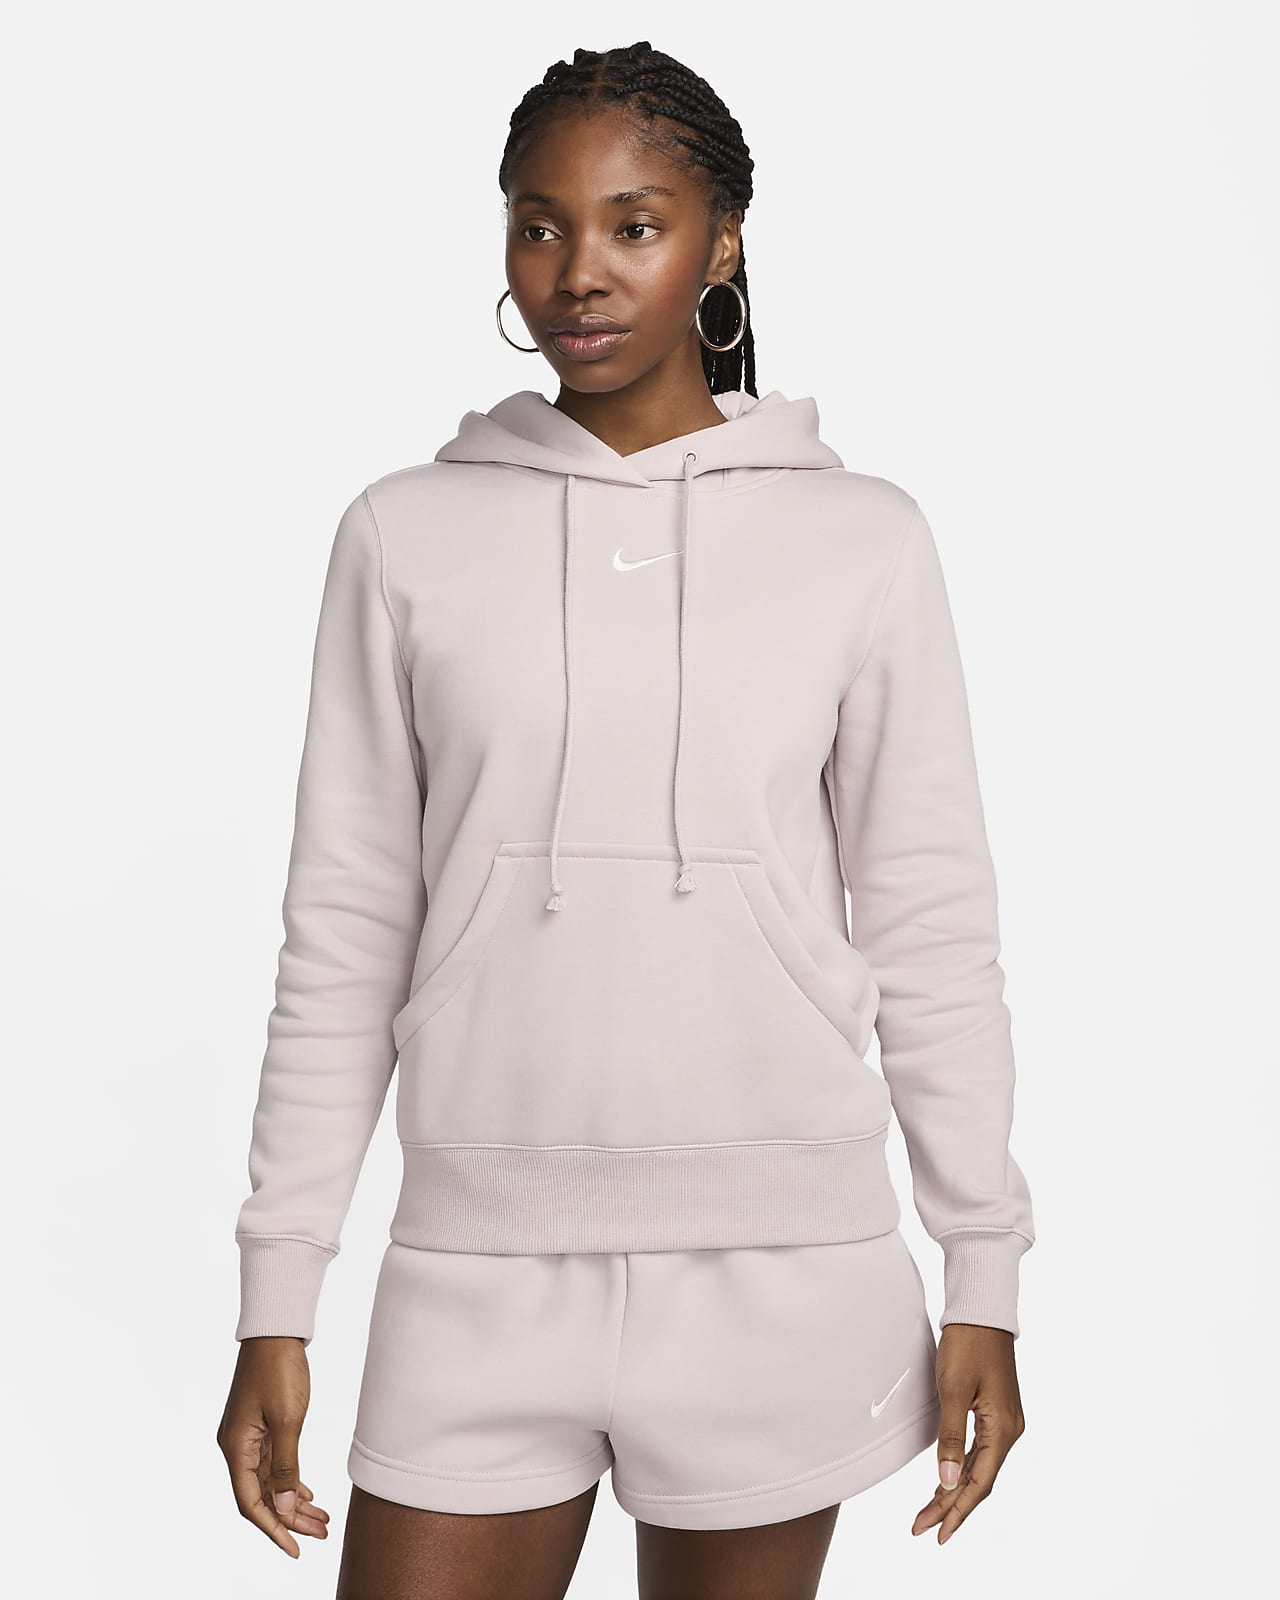 Hoodie pullover Nike Sportswear Phoenix Fleece para mulher